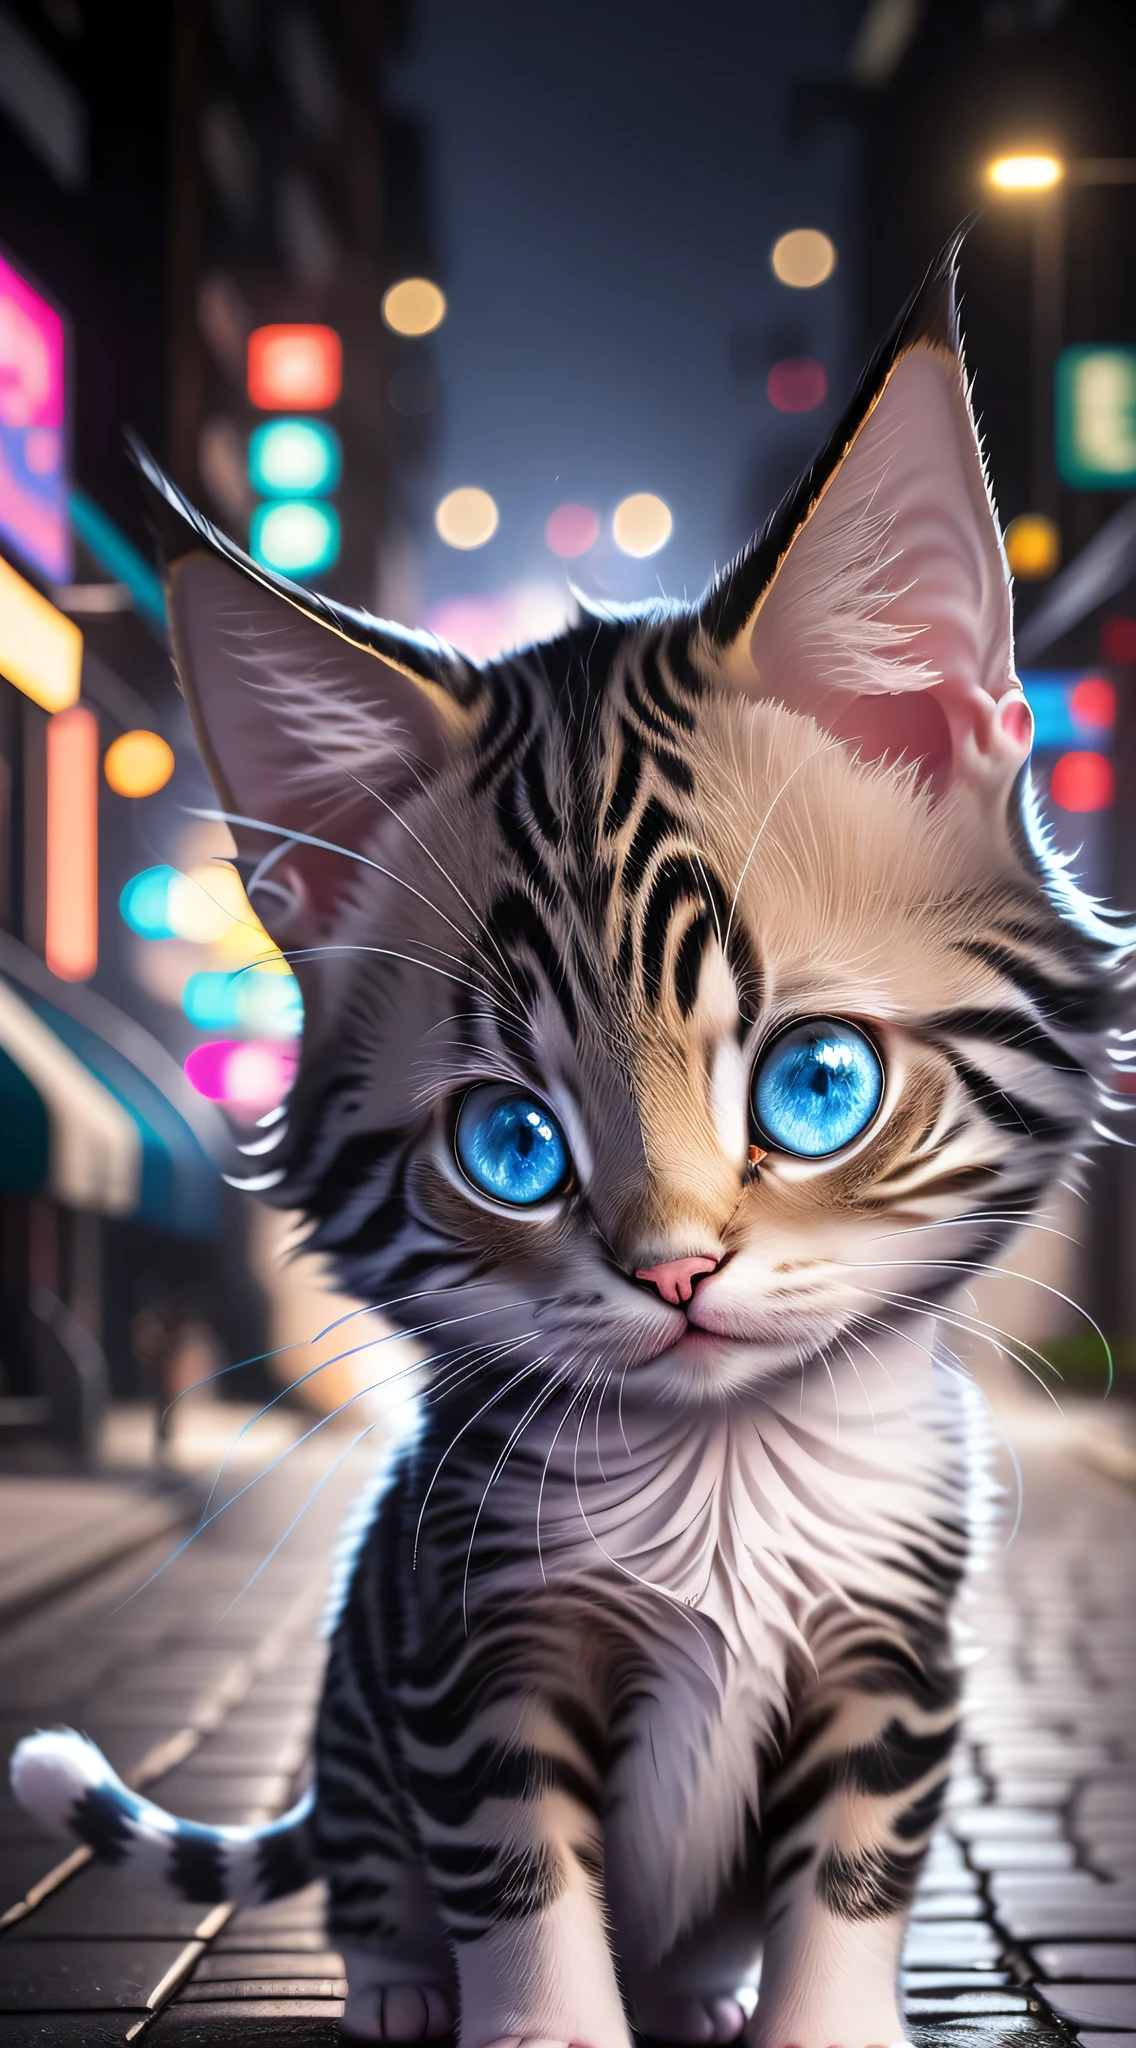 Little baby cute cat,Cute kitten in the dark night，blue eyes glow, In neon city street，high qulity,A high resolution,deep dark background